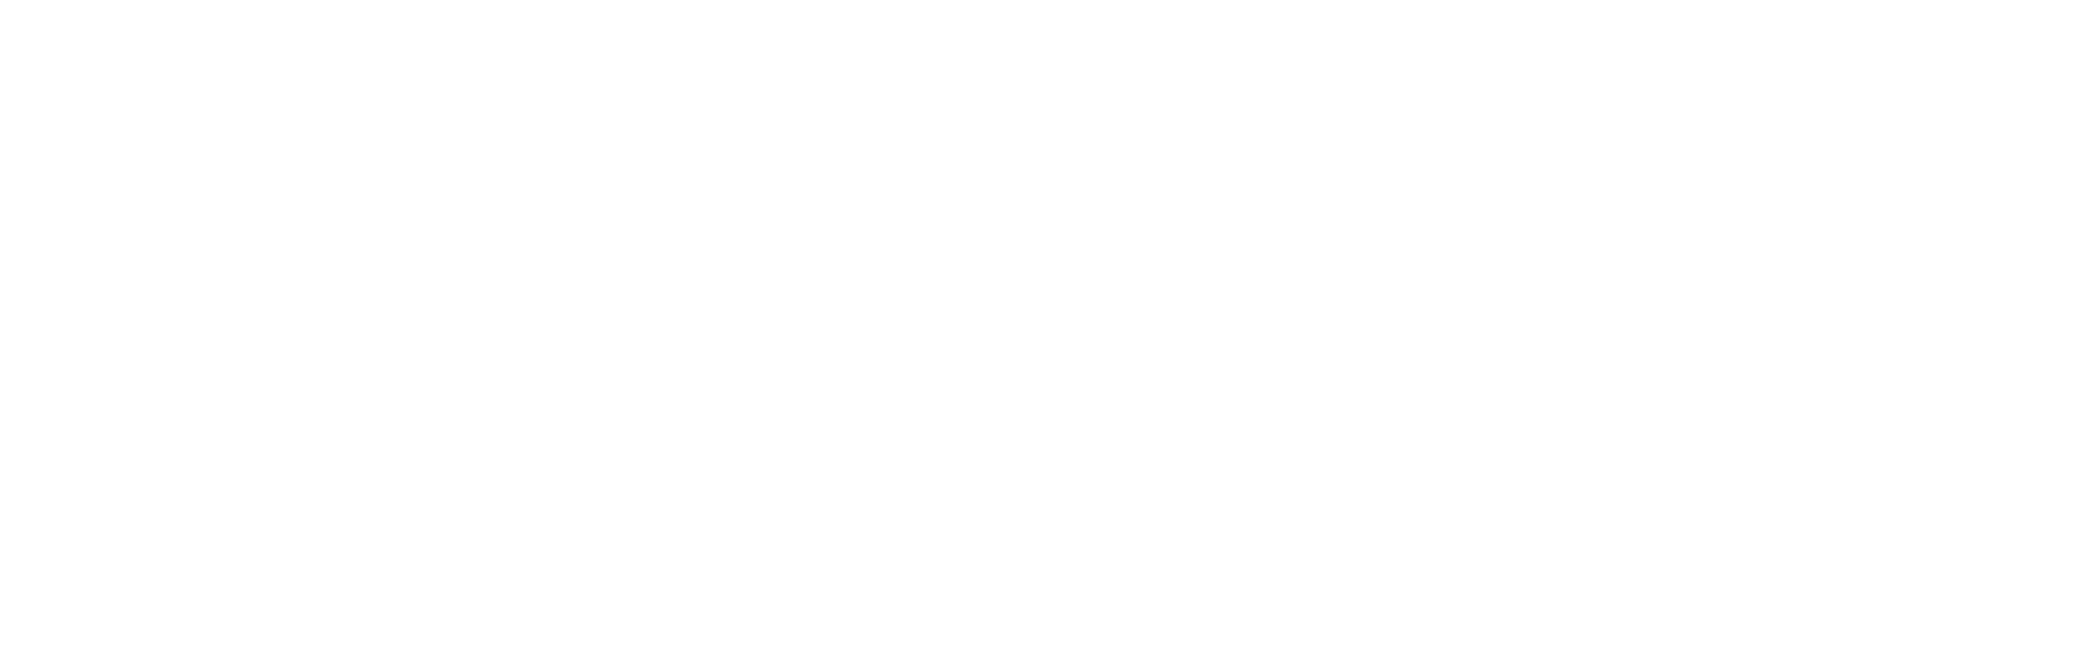 Mid Atlantic Auto Care Alliance